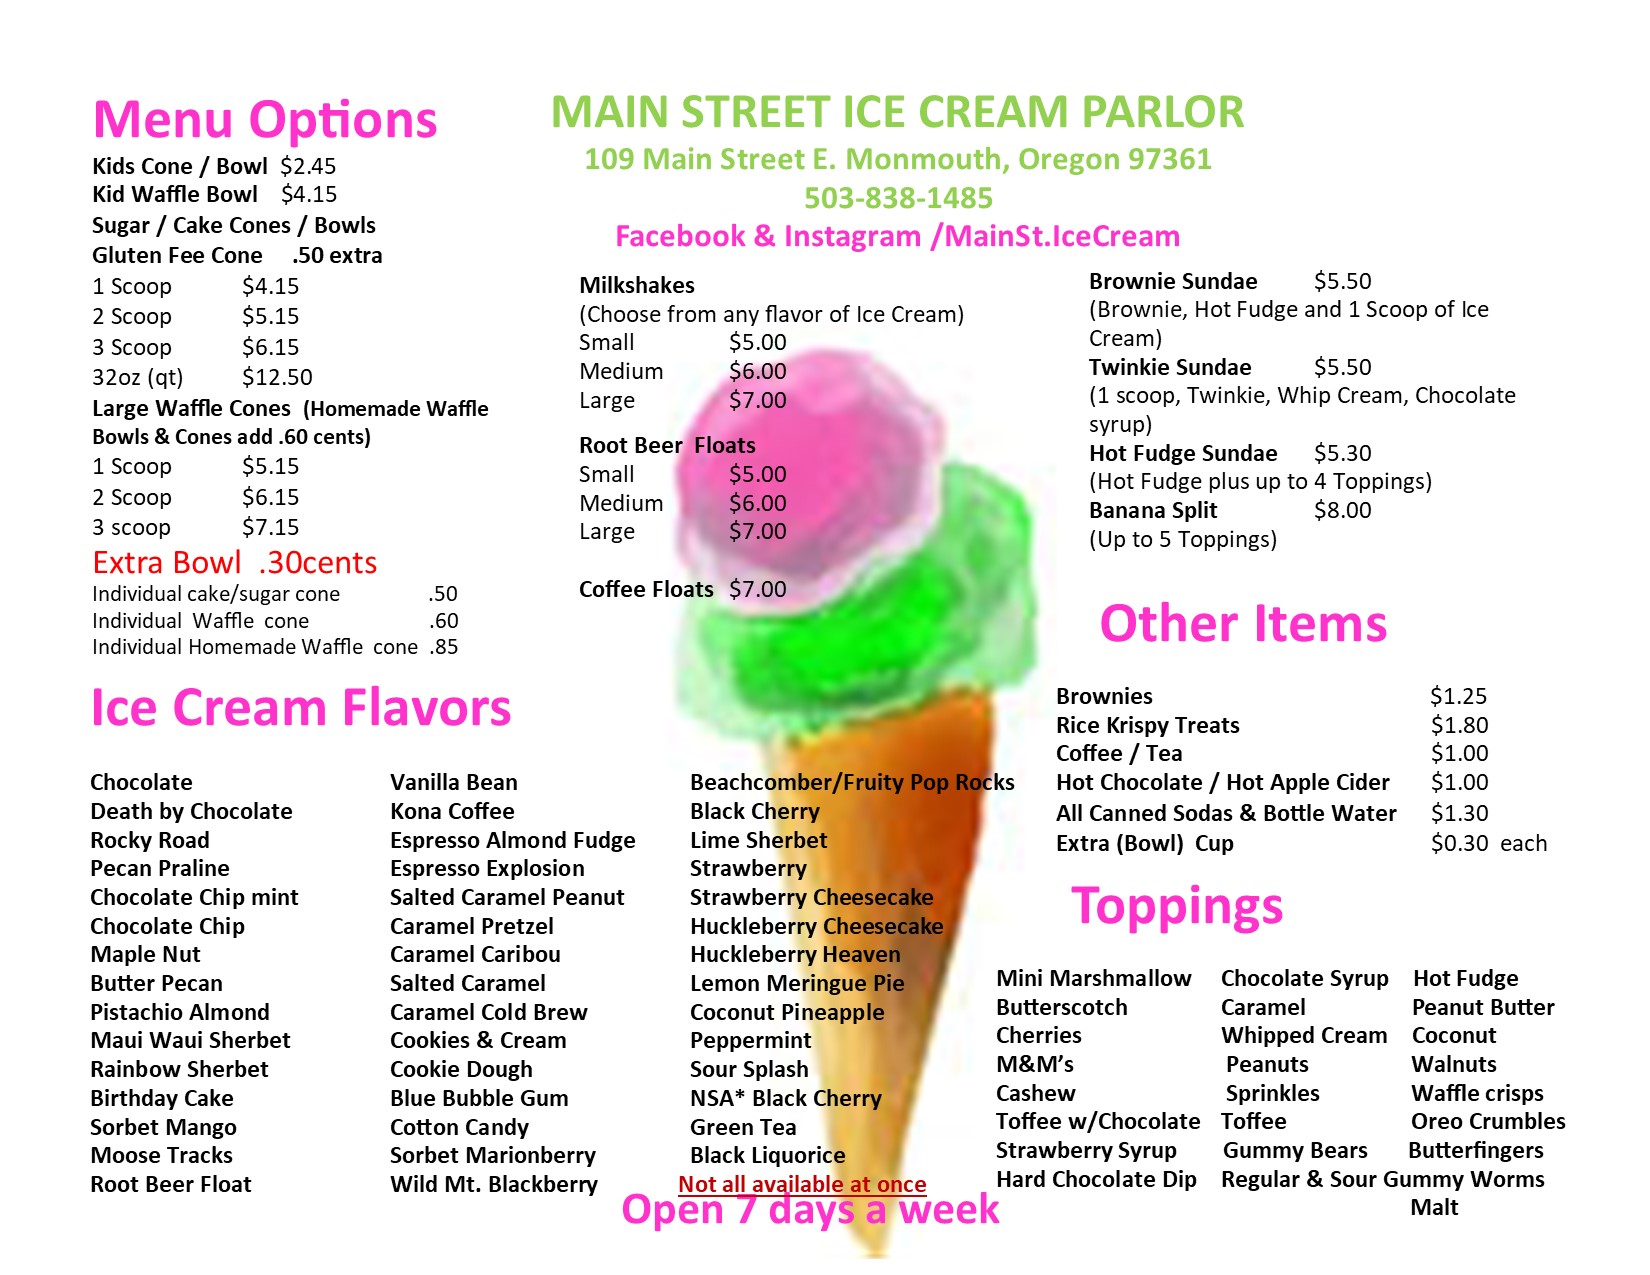 Main Street Ice Cream Parlor 109 Main St E, Monmouth, OR 97361